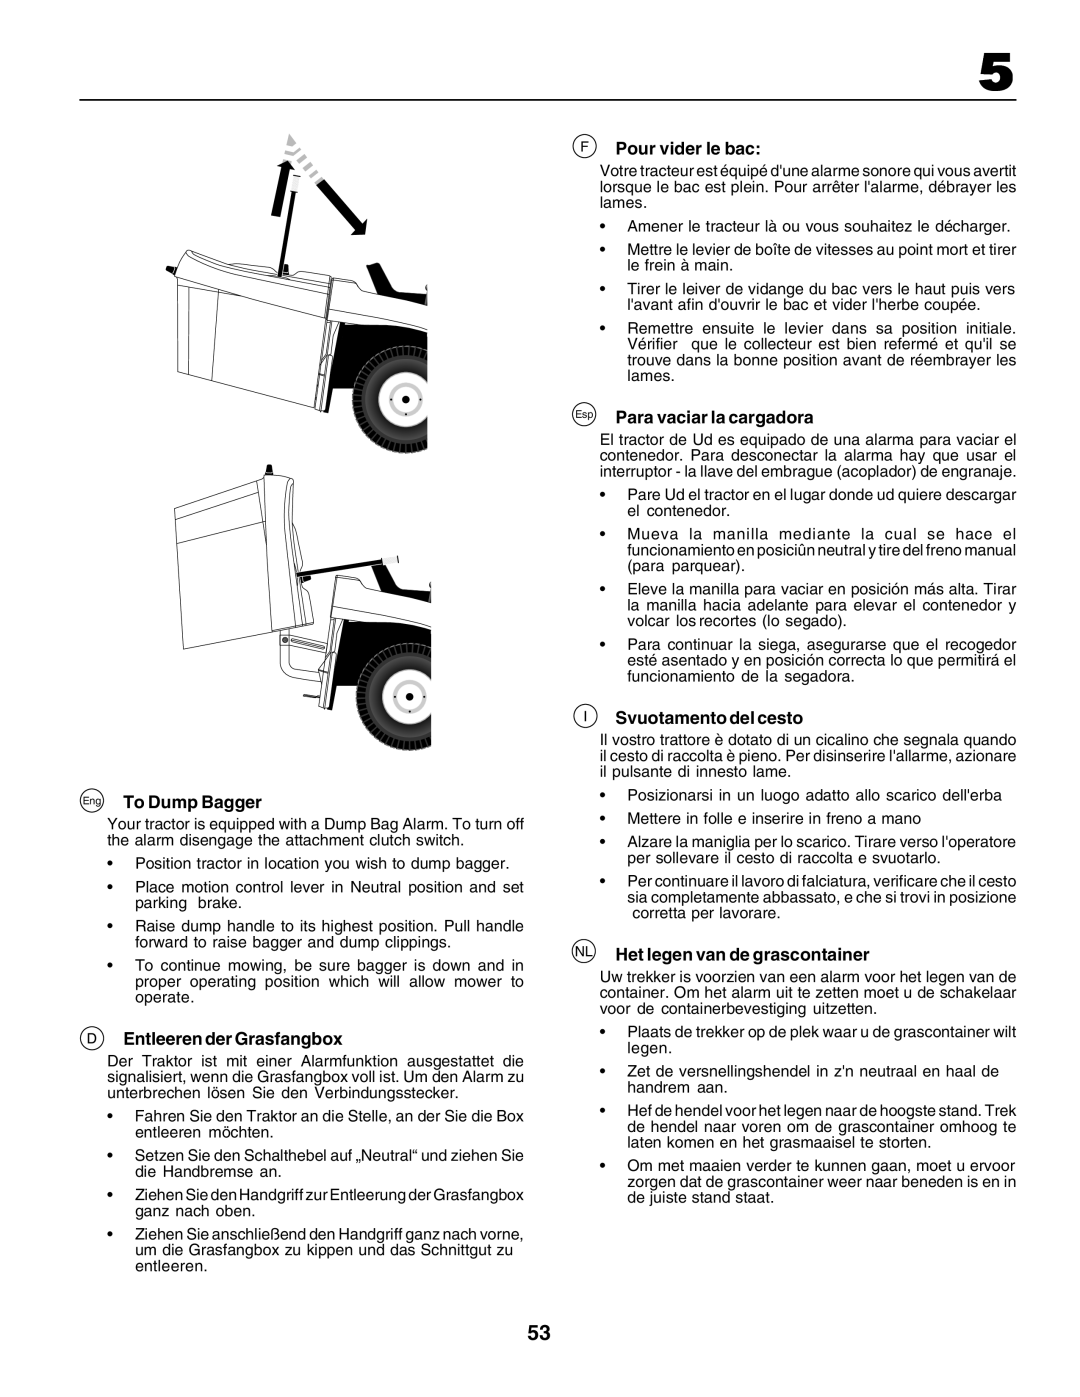 Husqvarna CT135 instruction manual Eng To Dump Bagger, Entleeren der Grasfangbox, FPour vider le bac, Svuotamento del cesto 